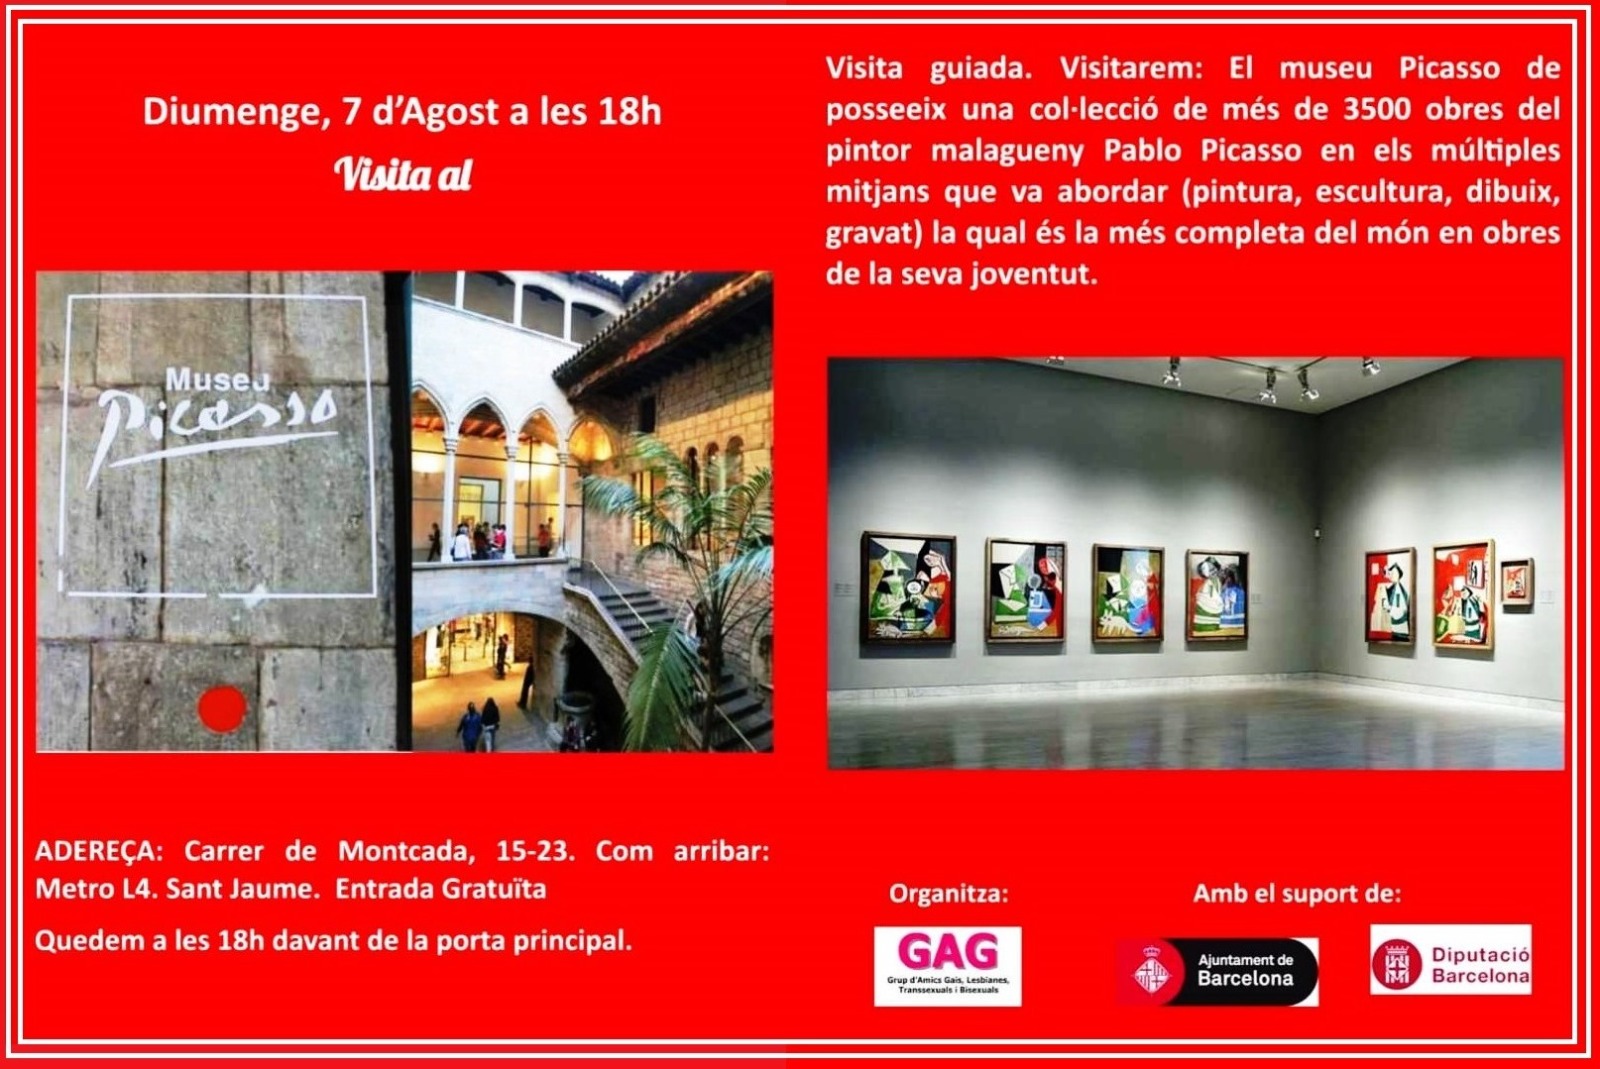 Diumenge, 7 d’agost a les 18 h. Visita al Museu Picasso.